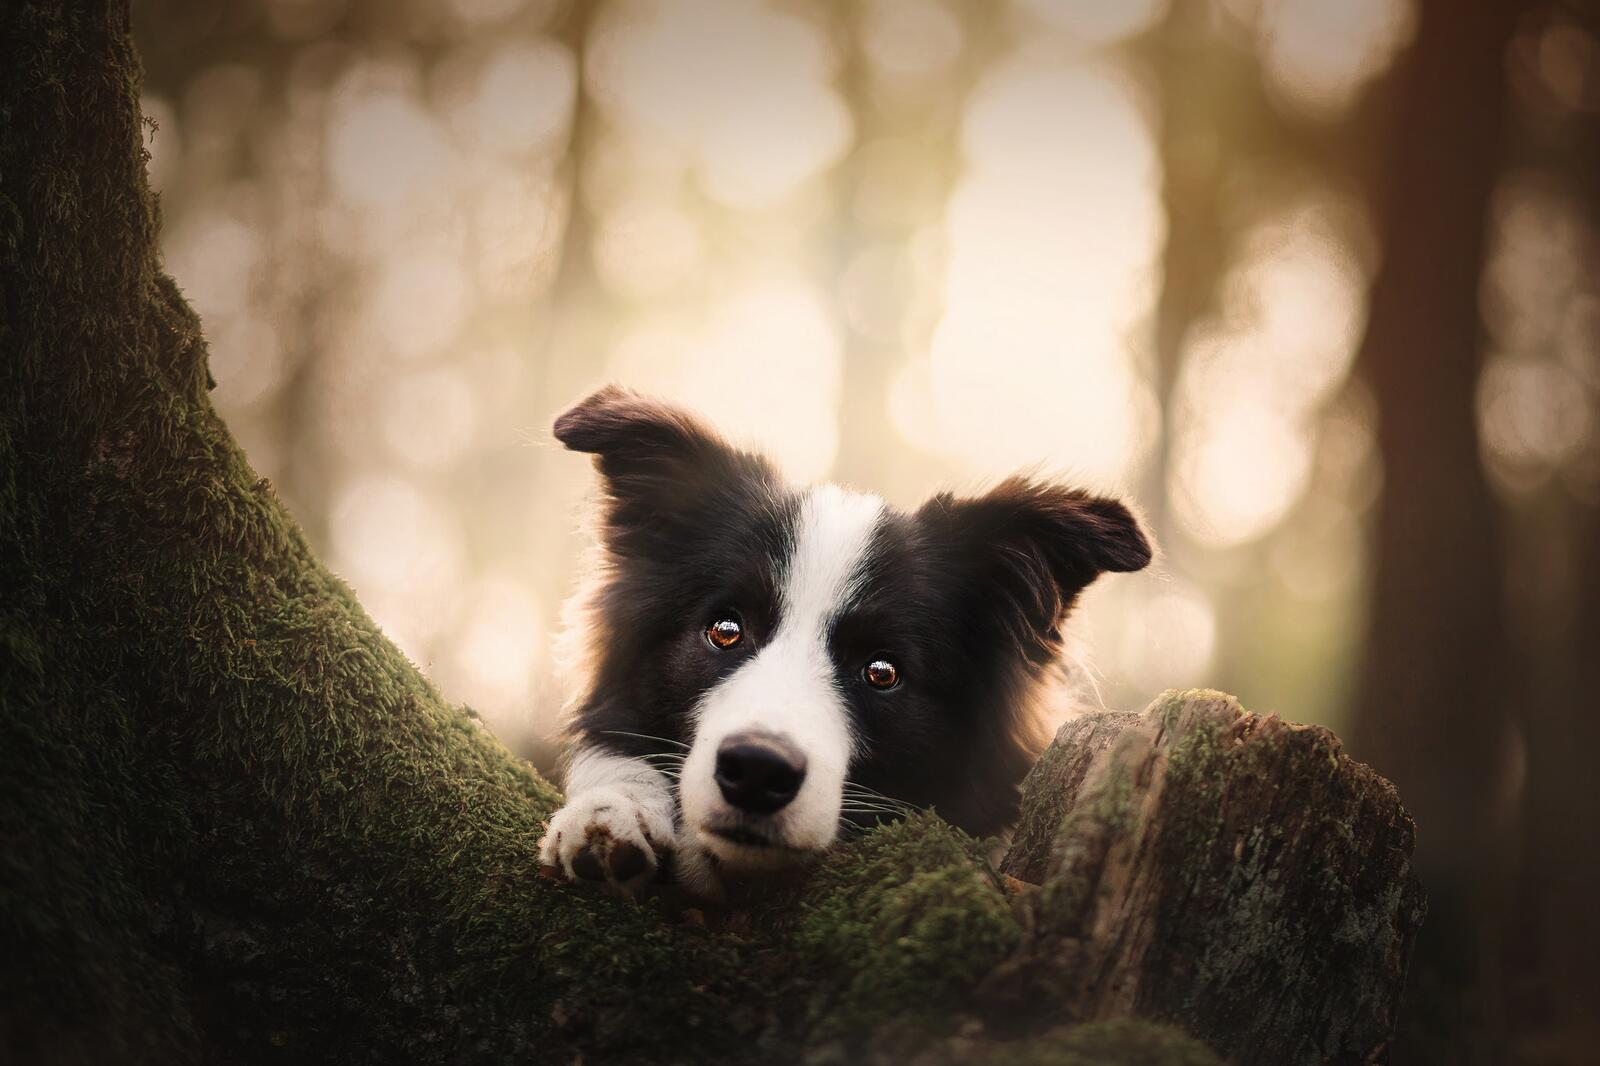 Бесплатное фото Черно-белая собака возле дерева